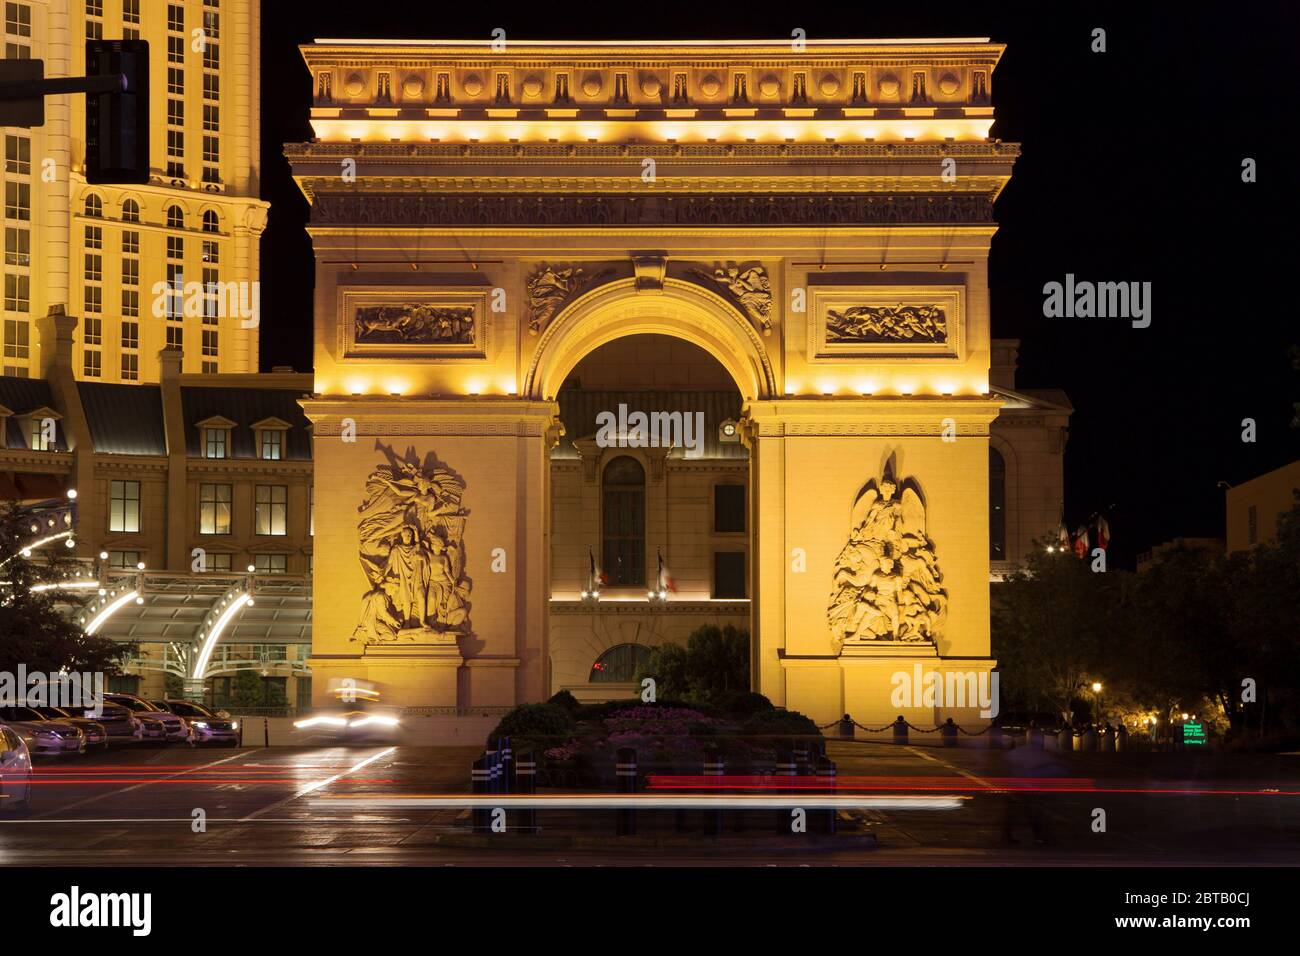 Paris las vegas hi-res stock photography and images - Alamy